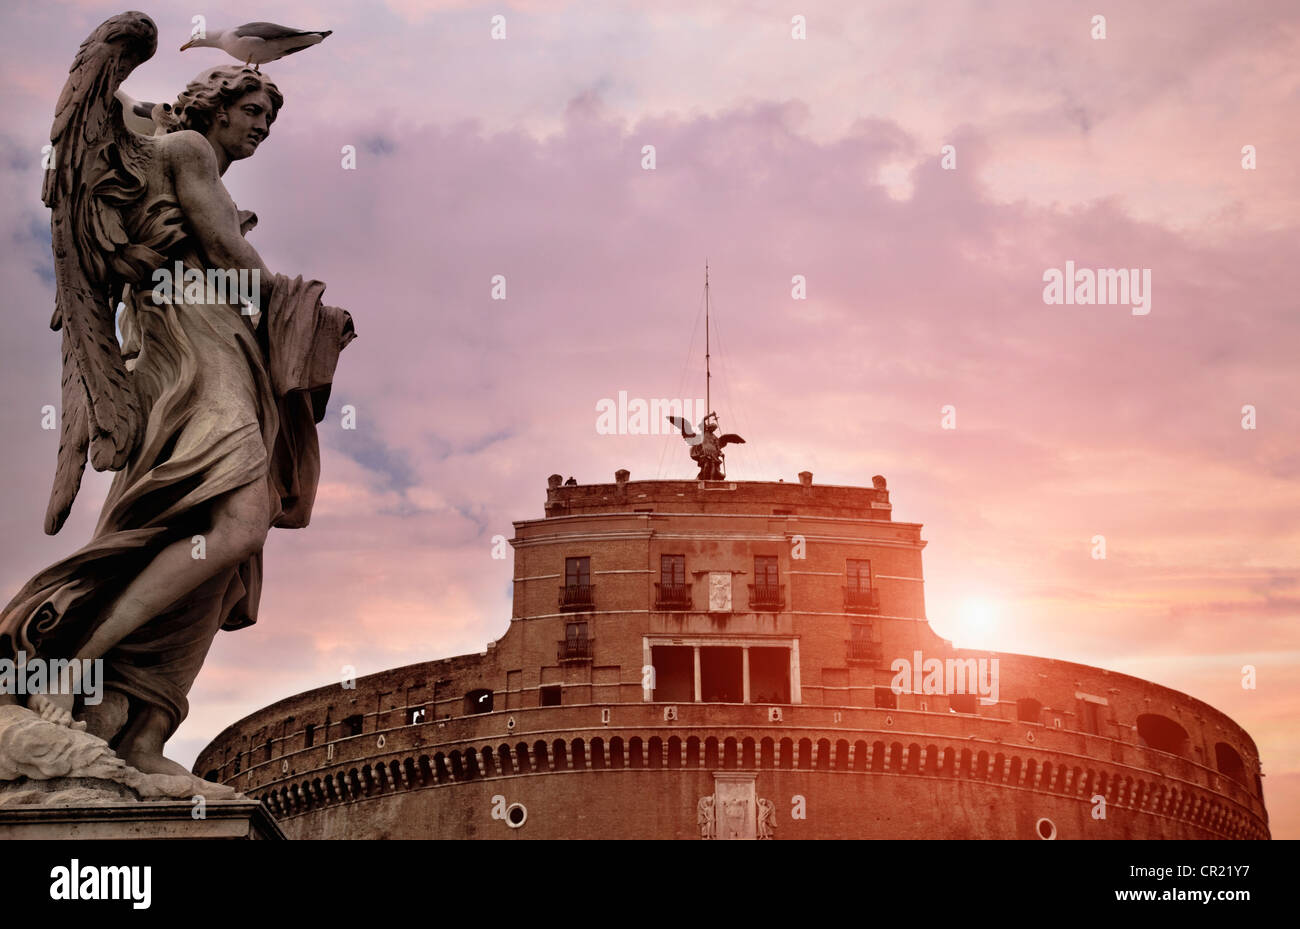 Castel SantAngelo and ornate building Stock Photo